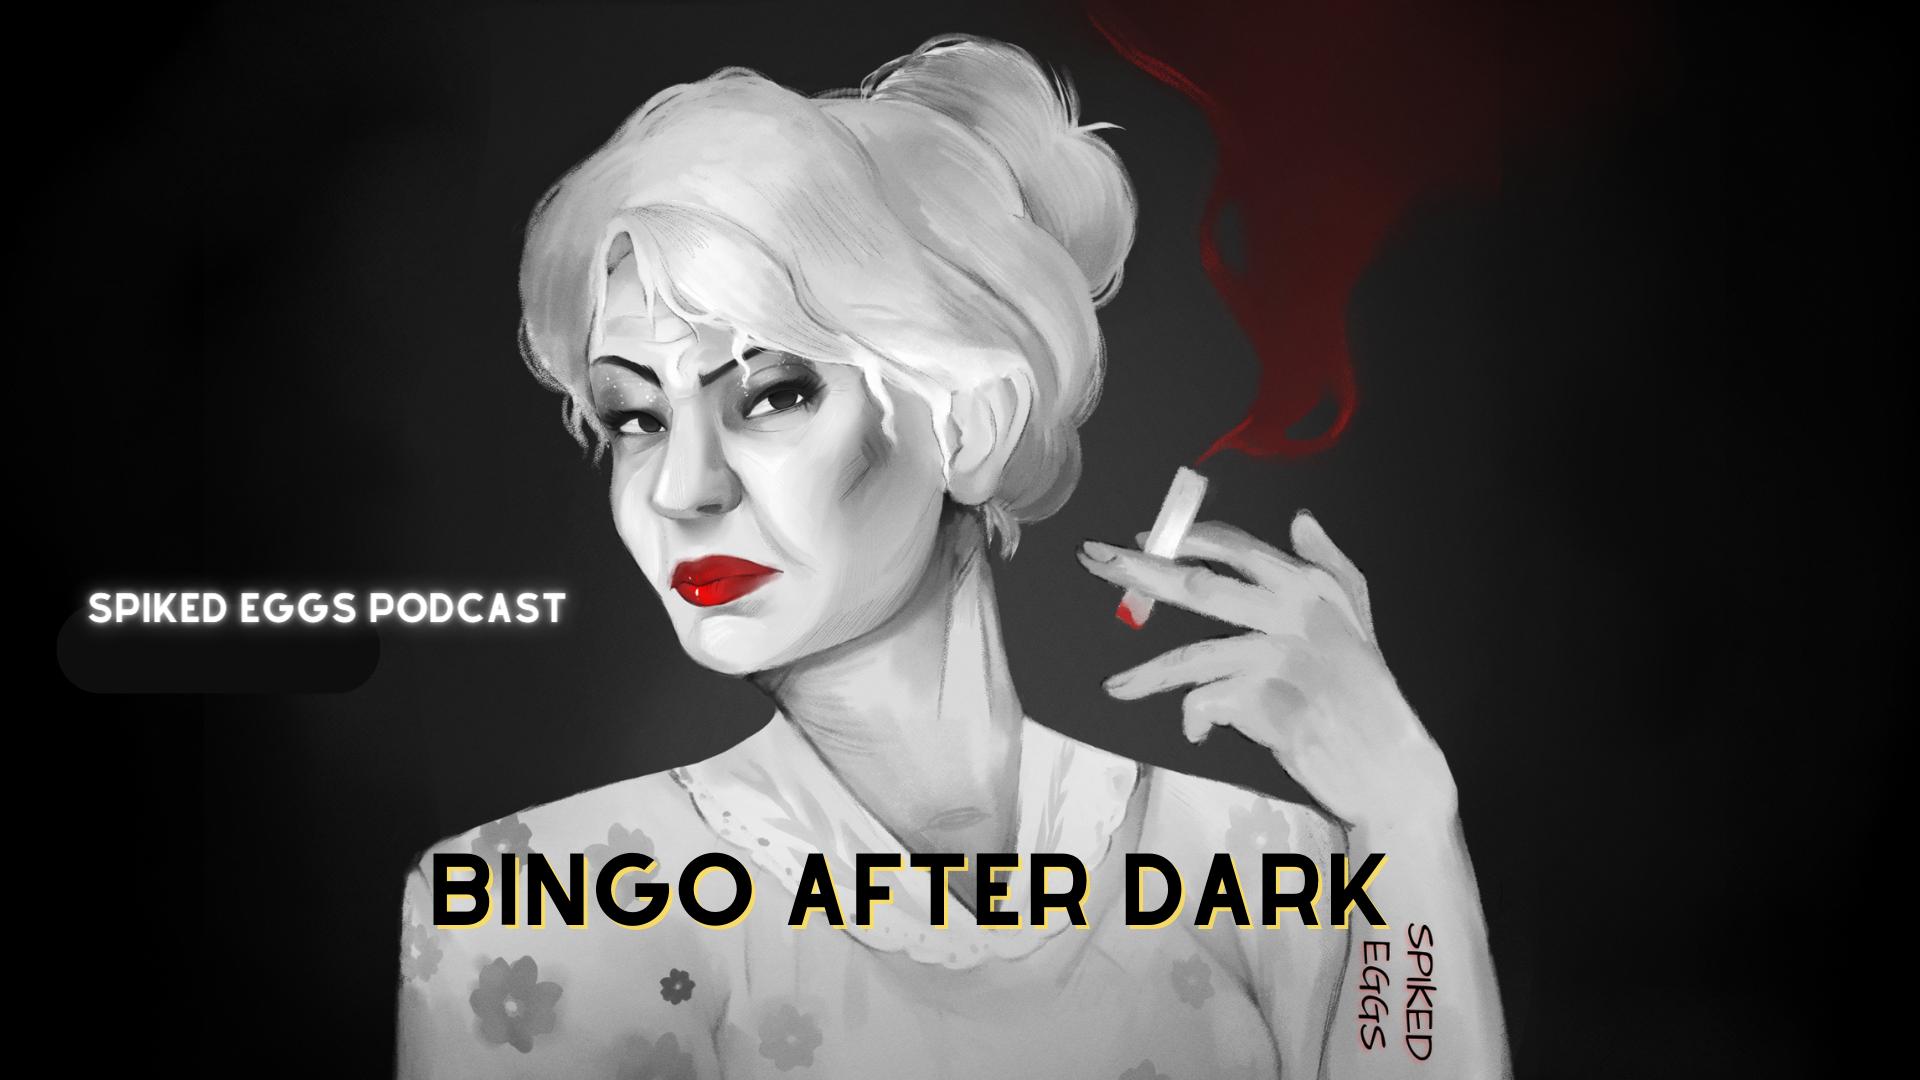 Spiked Eggs Podcast- Episode "Bingo After Dark"